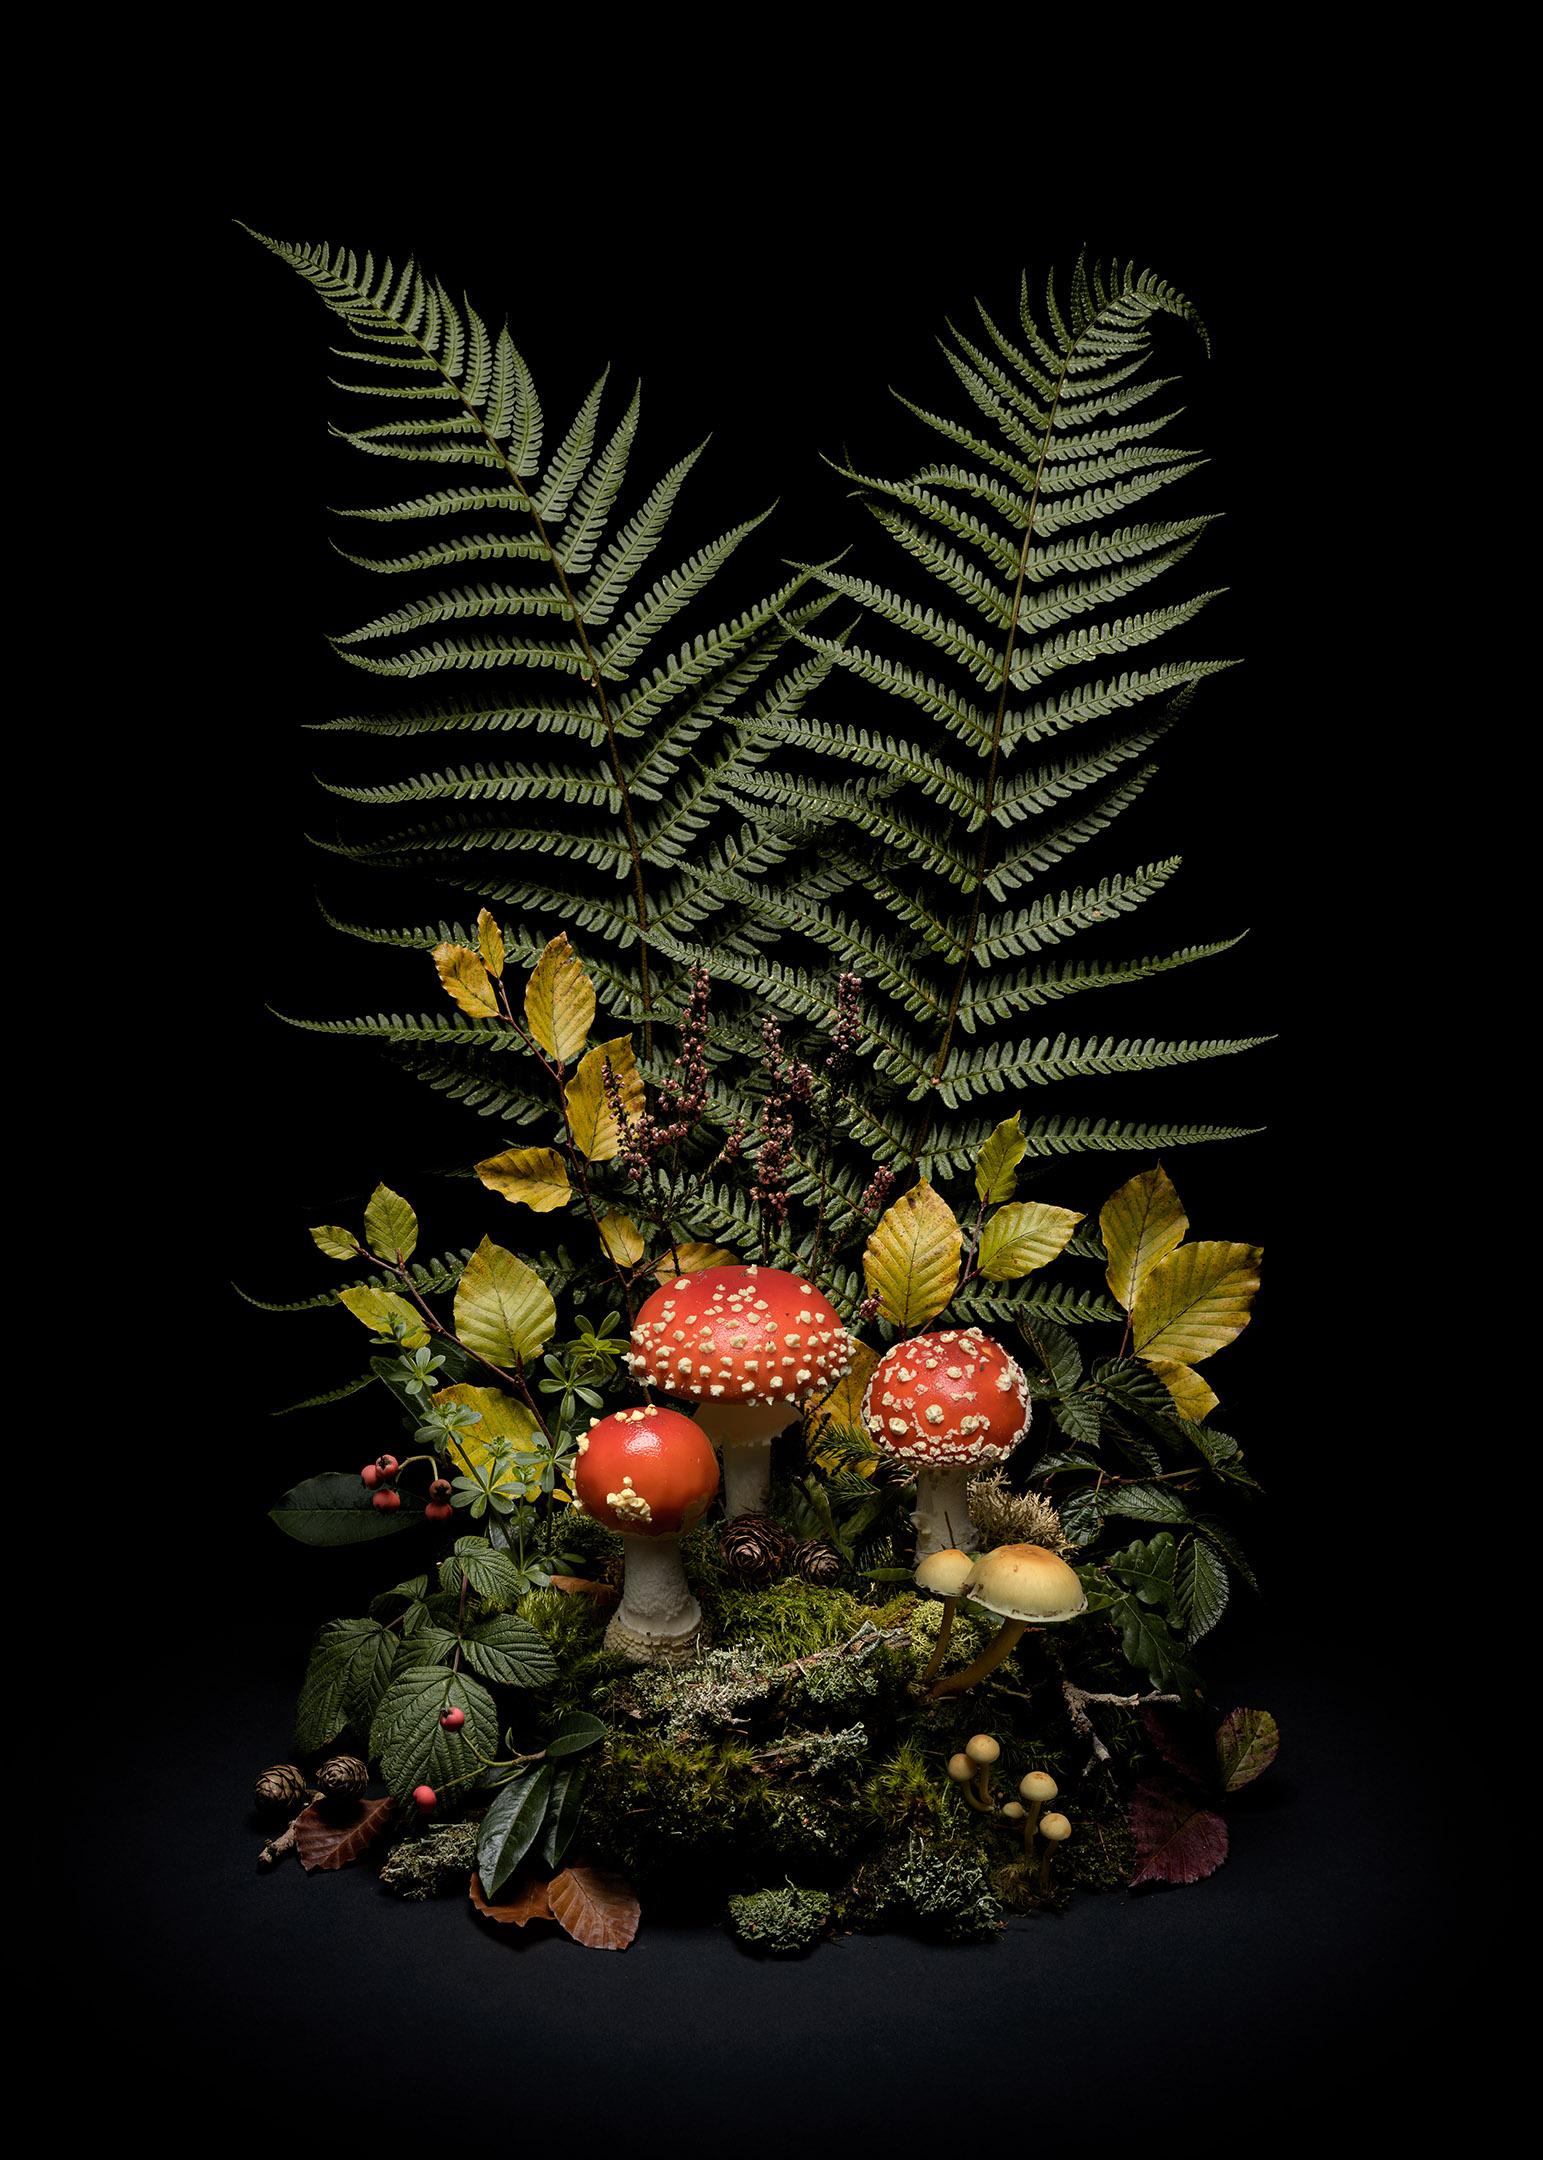 Jasper Goodall Still-Life Photograph - Dar Flora: Fly Argaric, May Foxgloves & Autumn Weald - 3 x Framed Prints Set